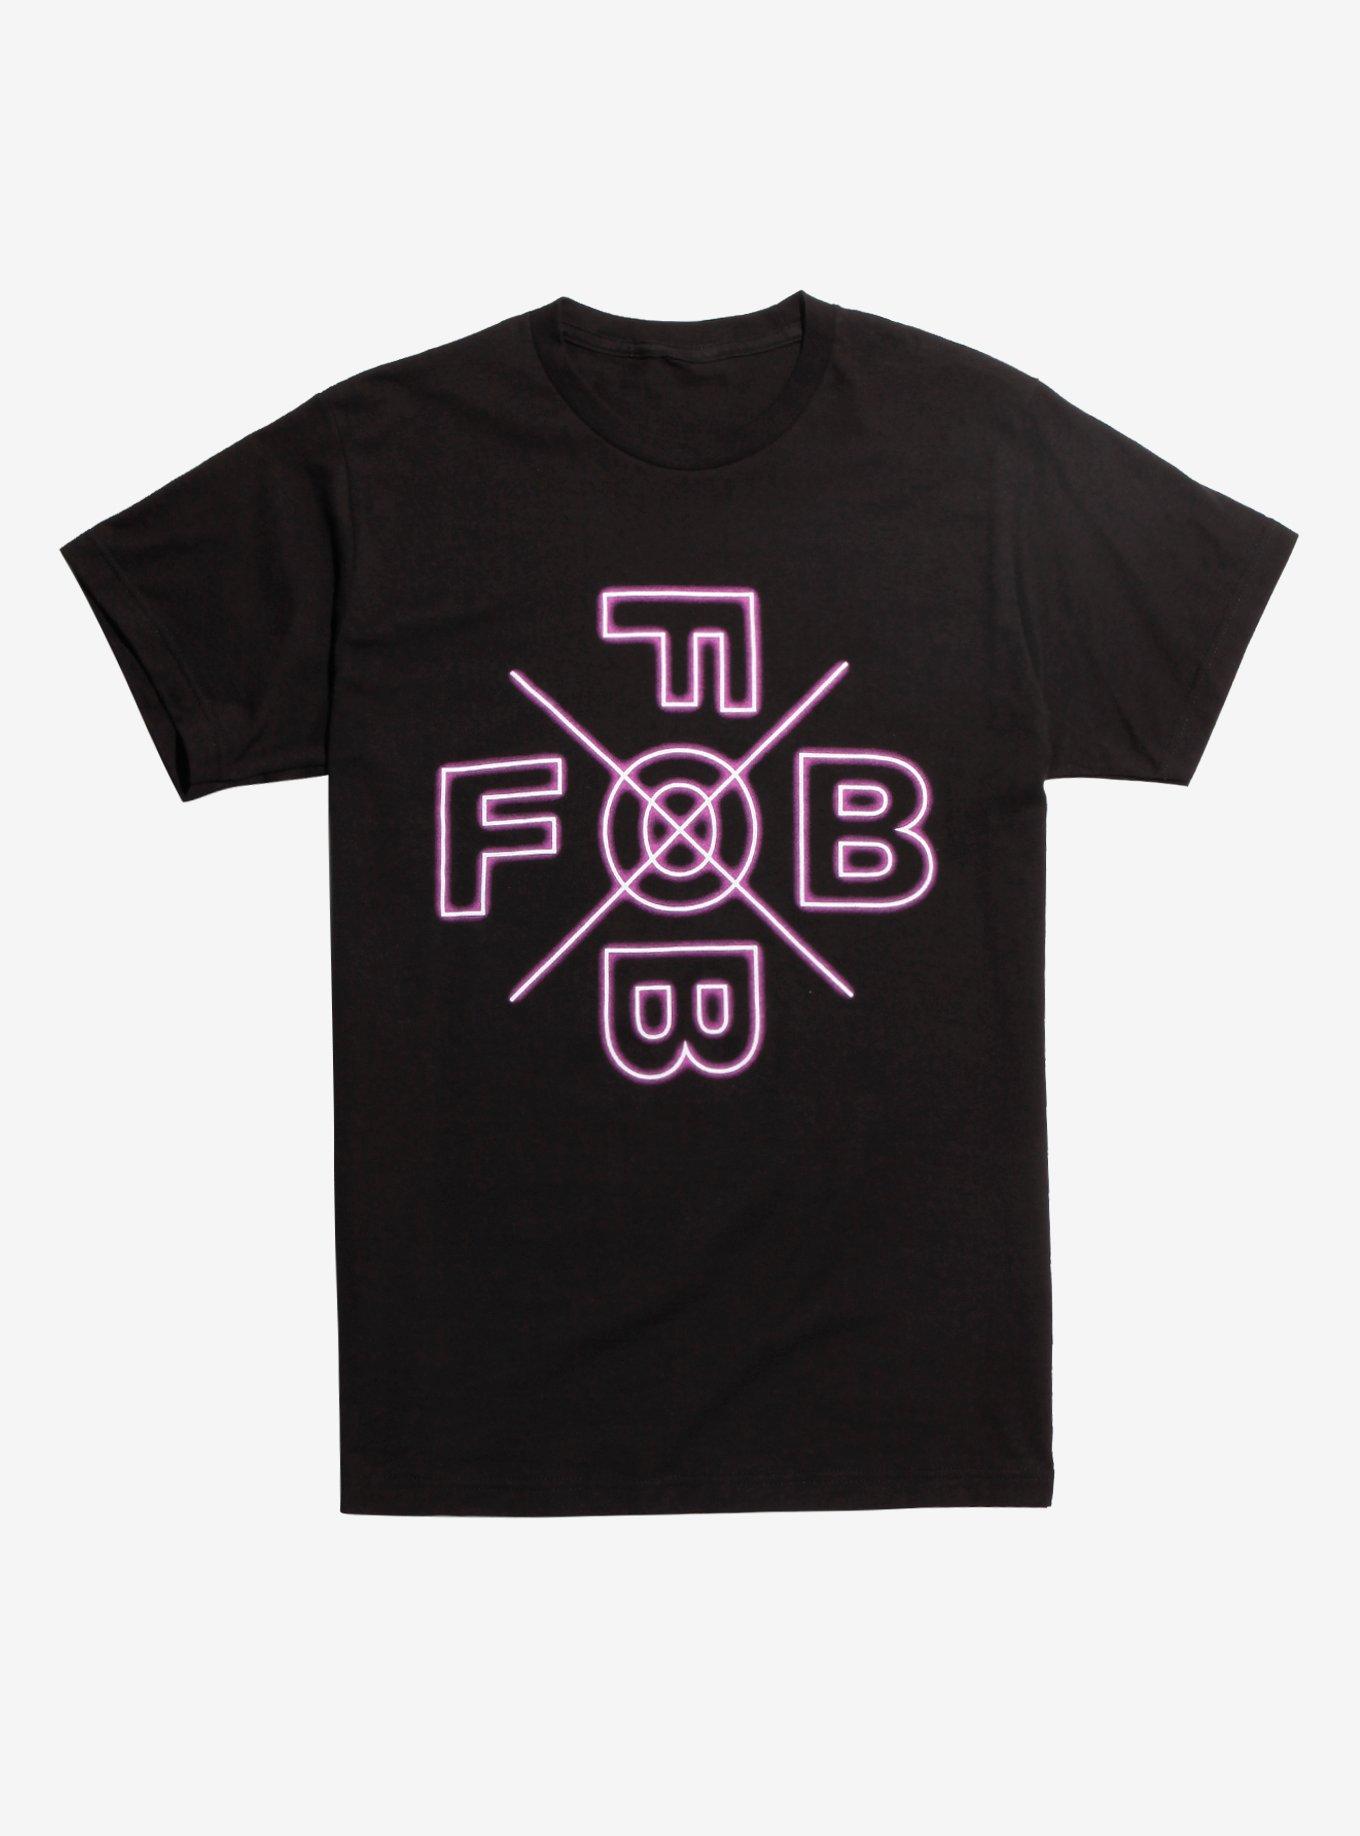 Fall Out Boy Glow Logo T-Shirt, BLACK, hi-res